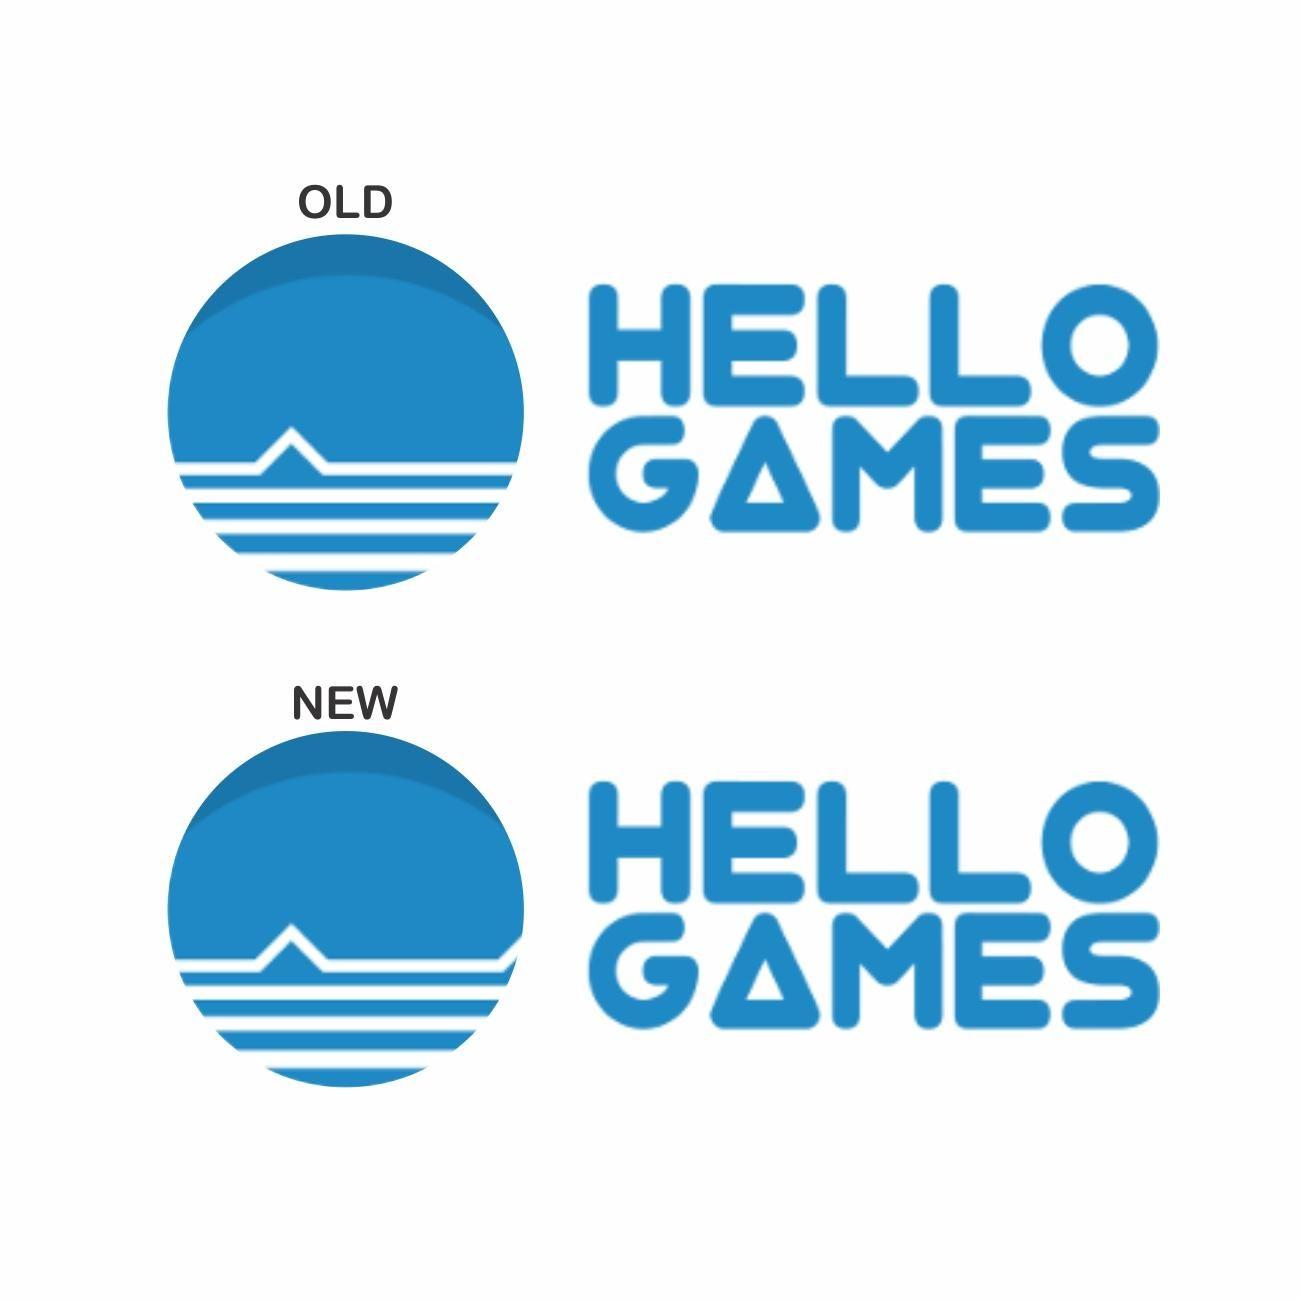 Old Games Logo - Hello Games new logo